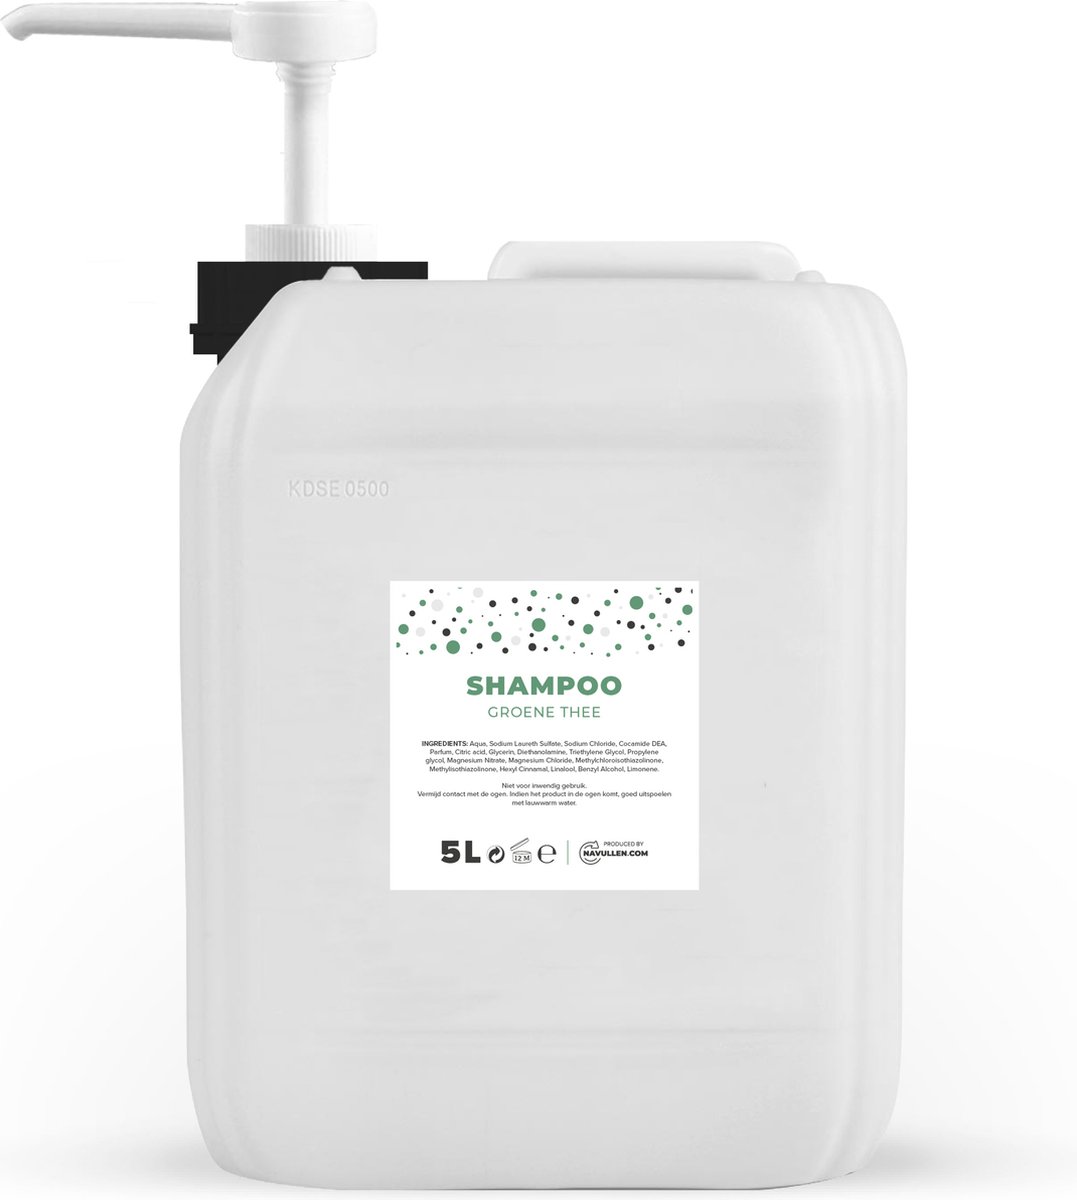 Shampoo - Groene thee - 5 Liter Jerrycan - Met pomp - Navulling - Navullen